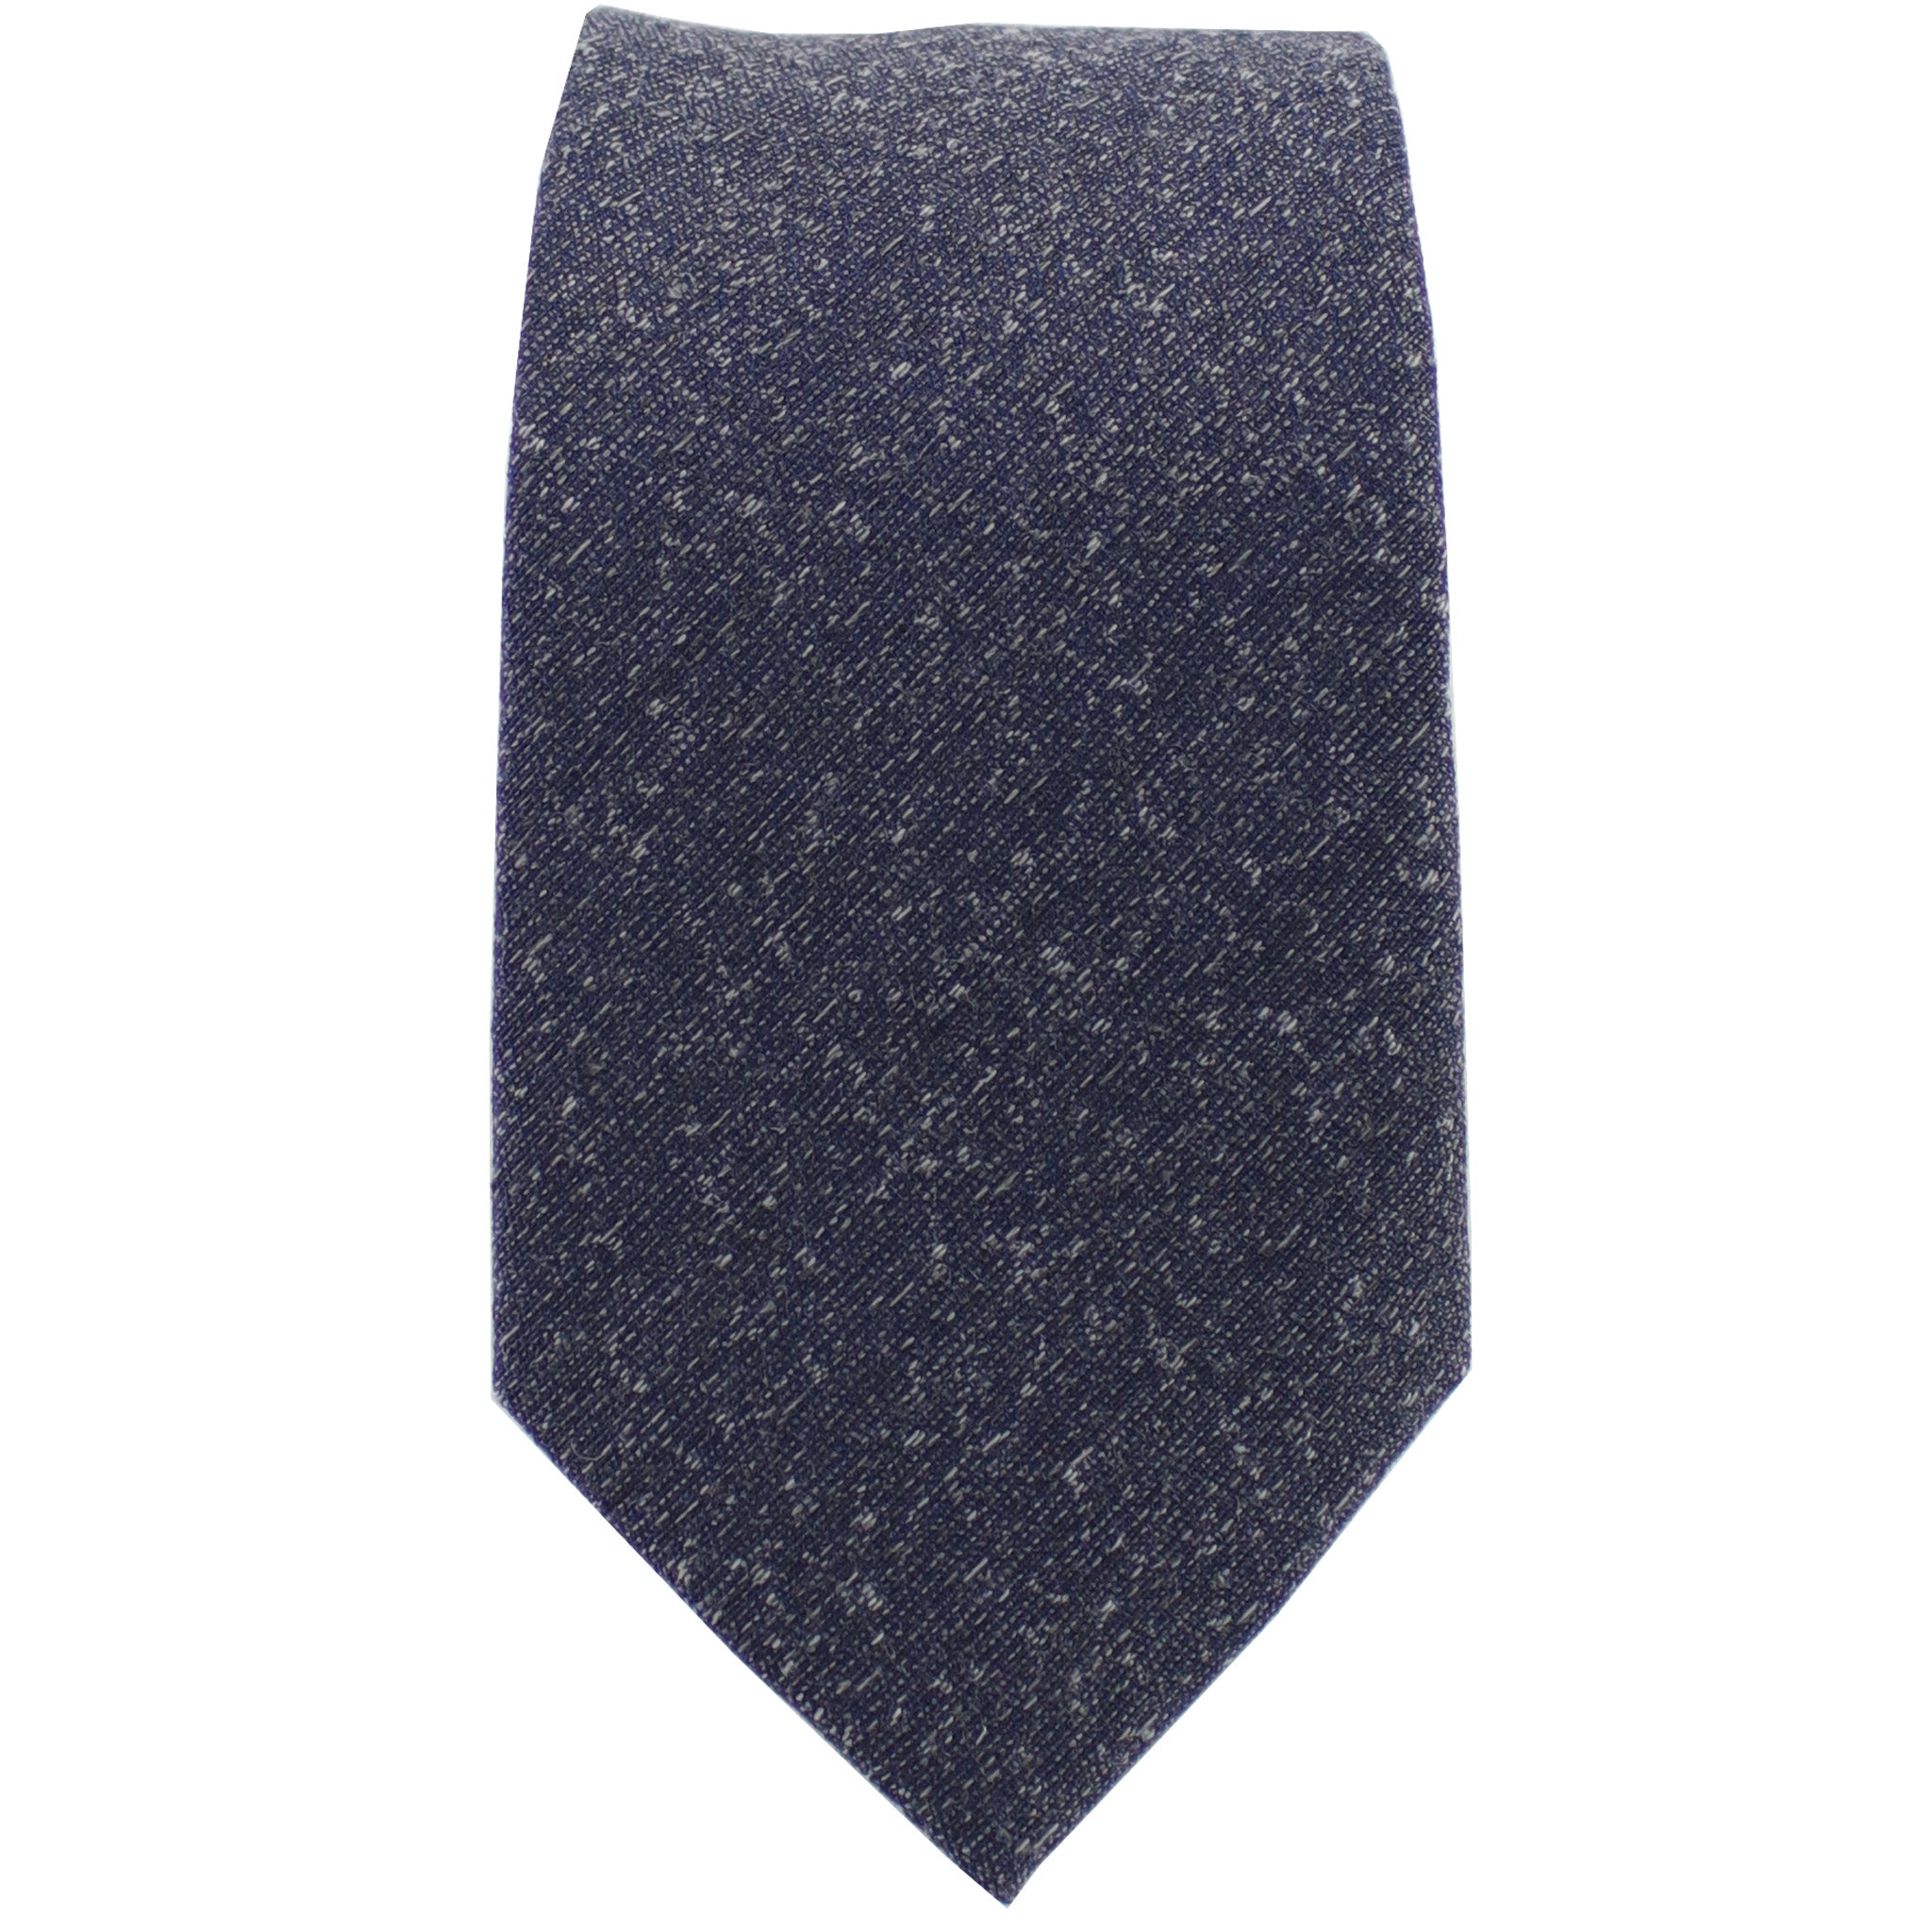 Grey Speck Tie from DIBI